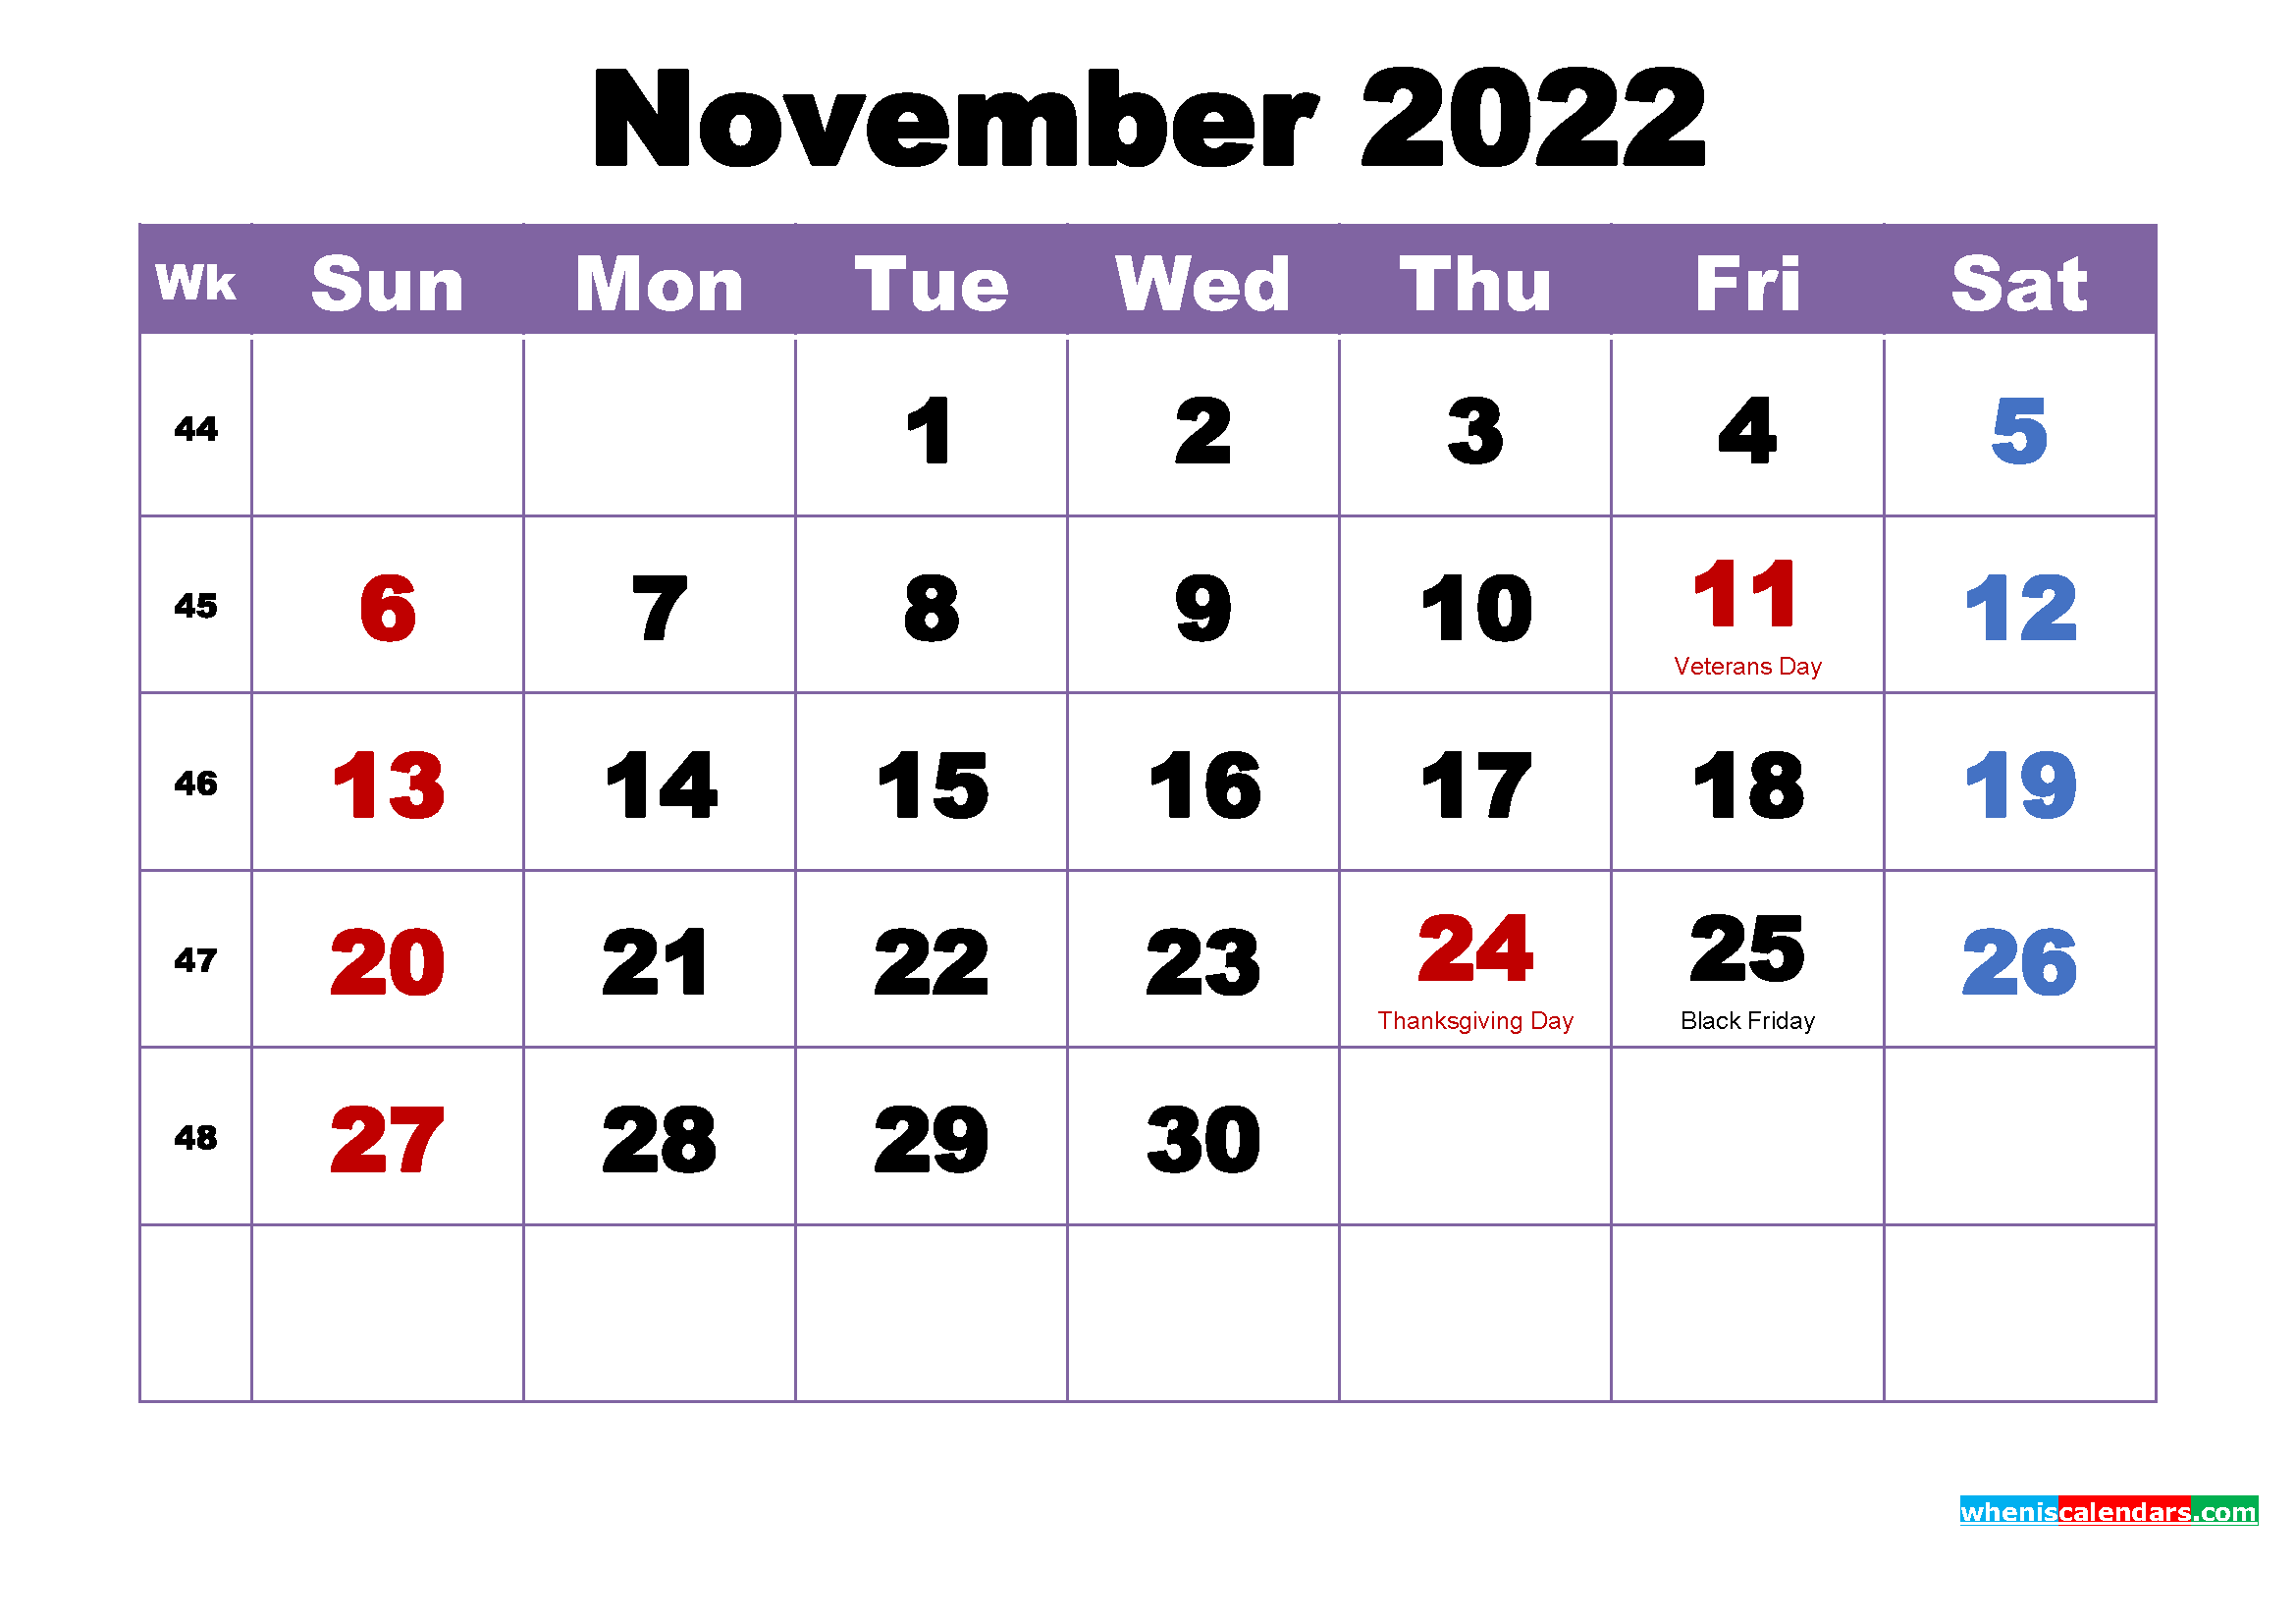 November 2022 Calendar Holidays November 2022 Calendar With Holidays Printable